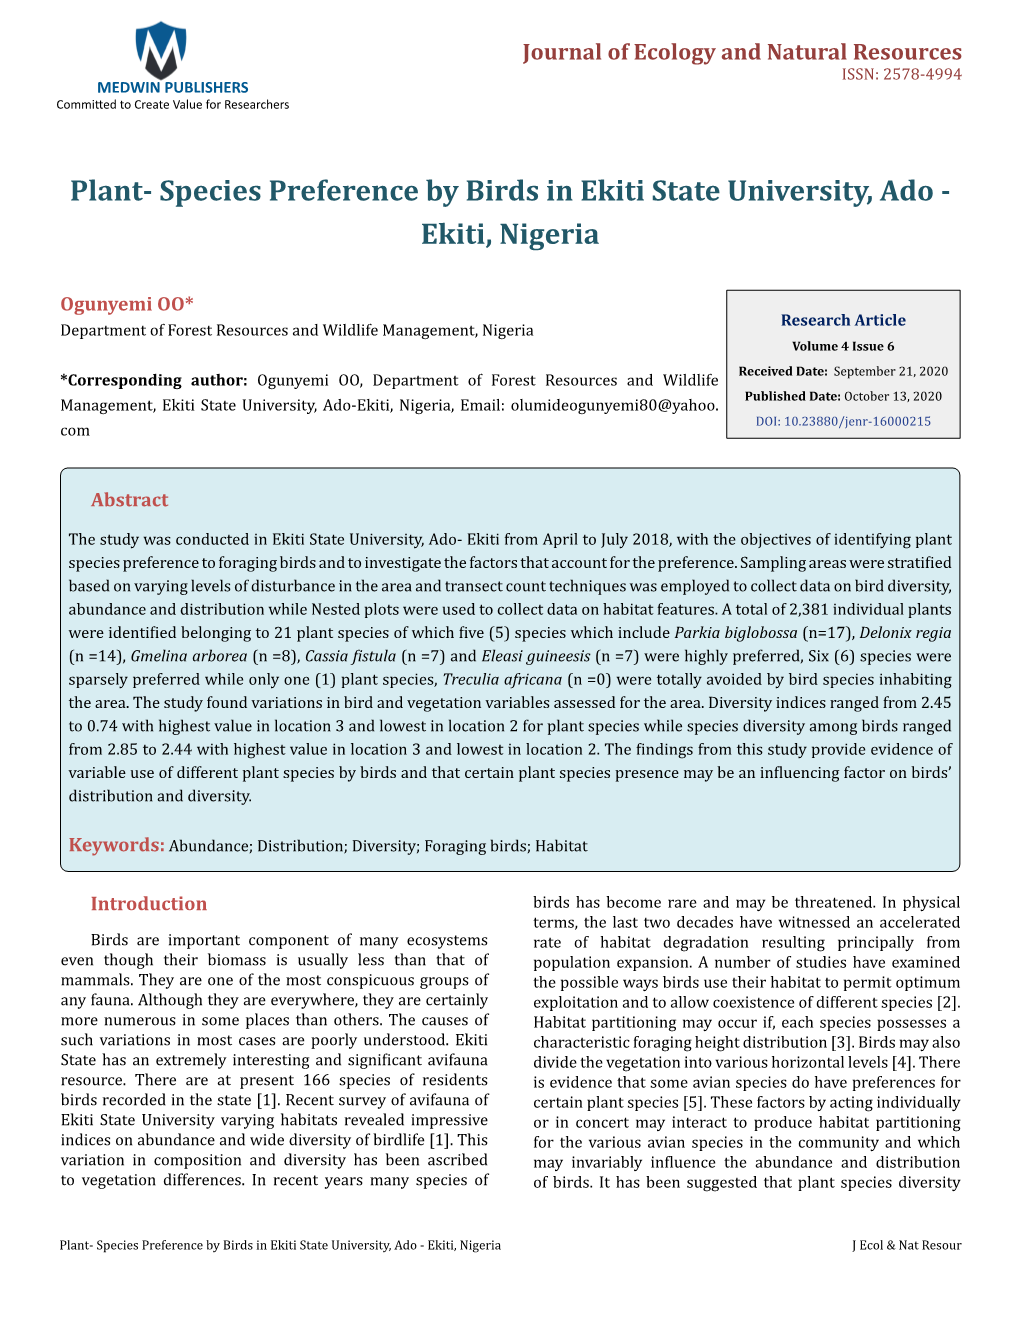 Plant- Species Preference by Birds in Ekiti State University, Ado - Ekiti, Nigeria